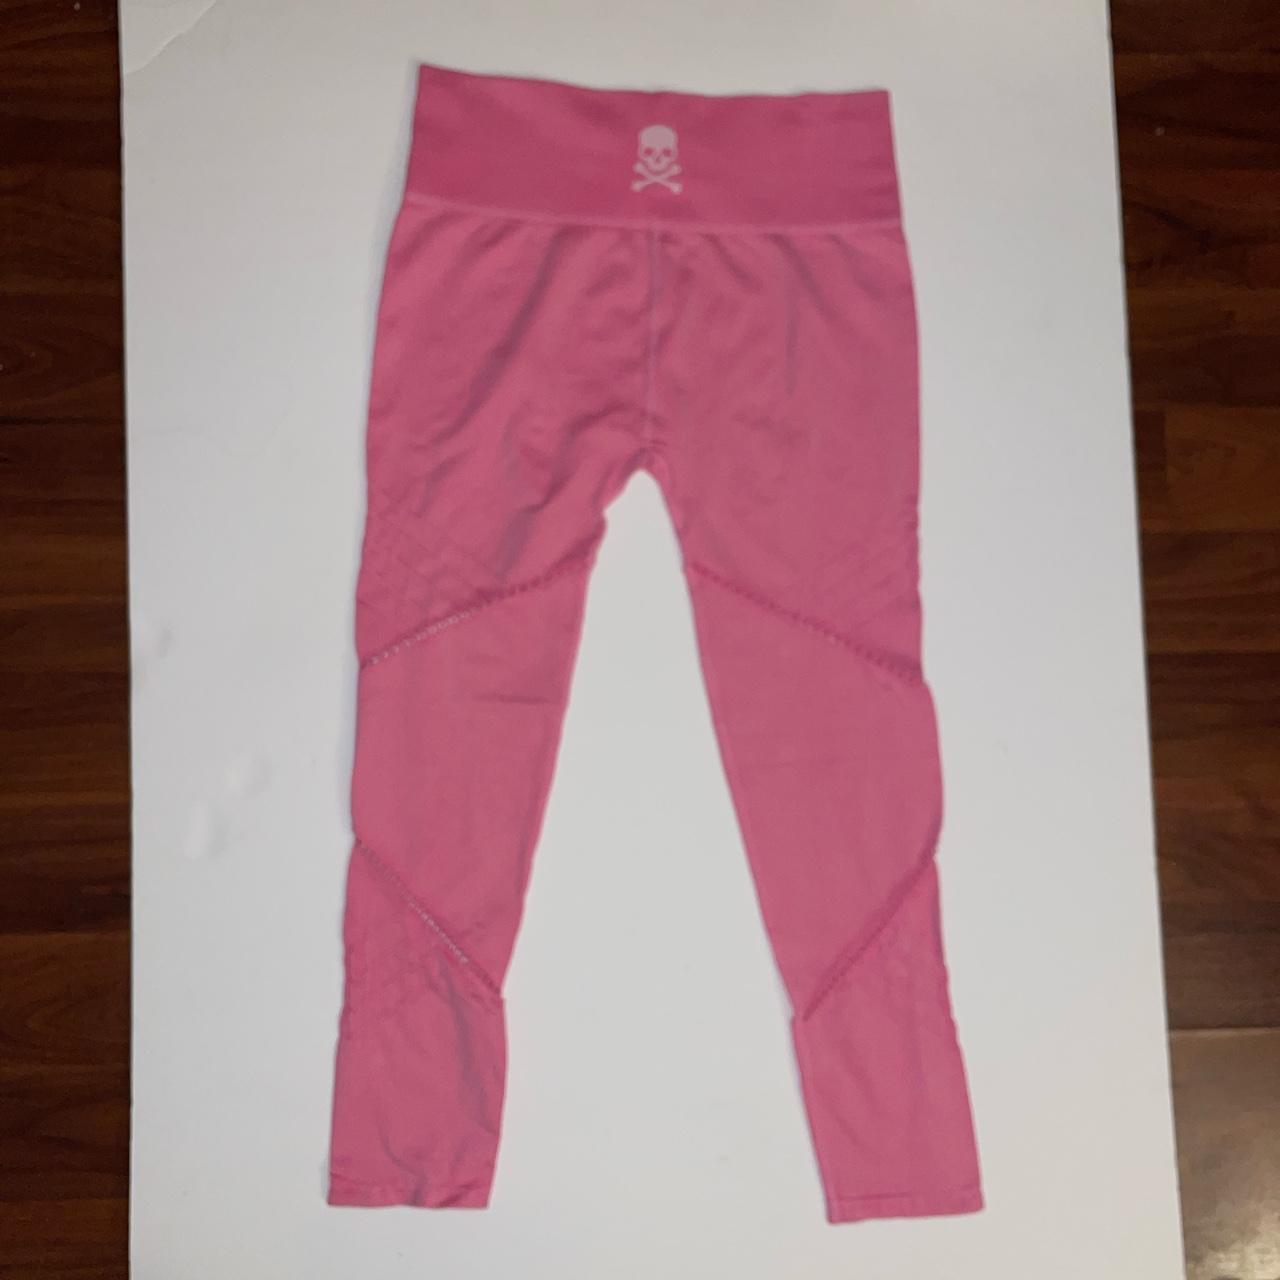 Product Image 2 - HOT PINK SEAMLESS LEGGING

#pink #gymset